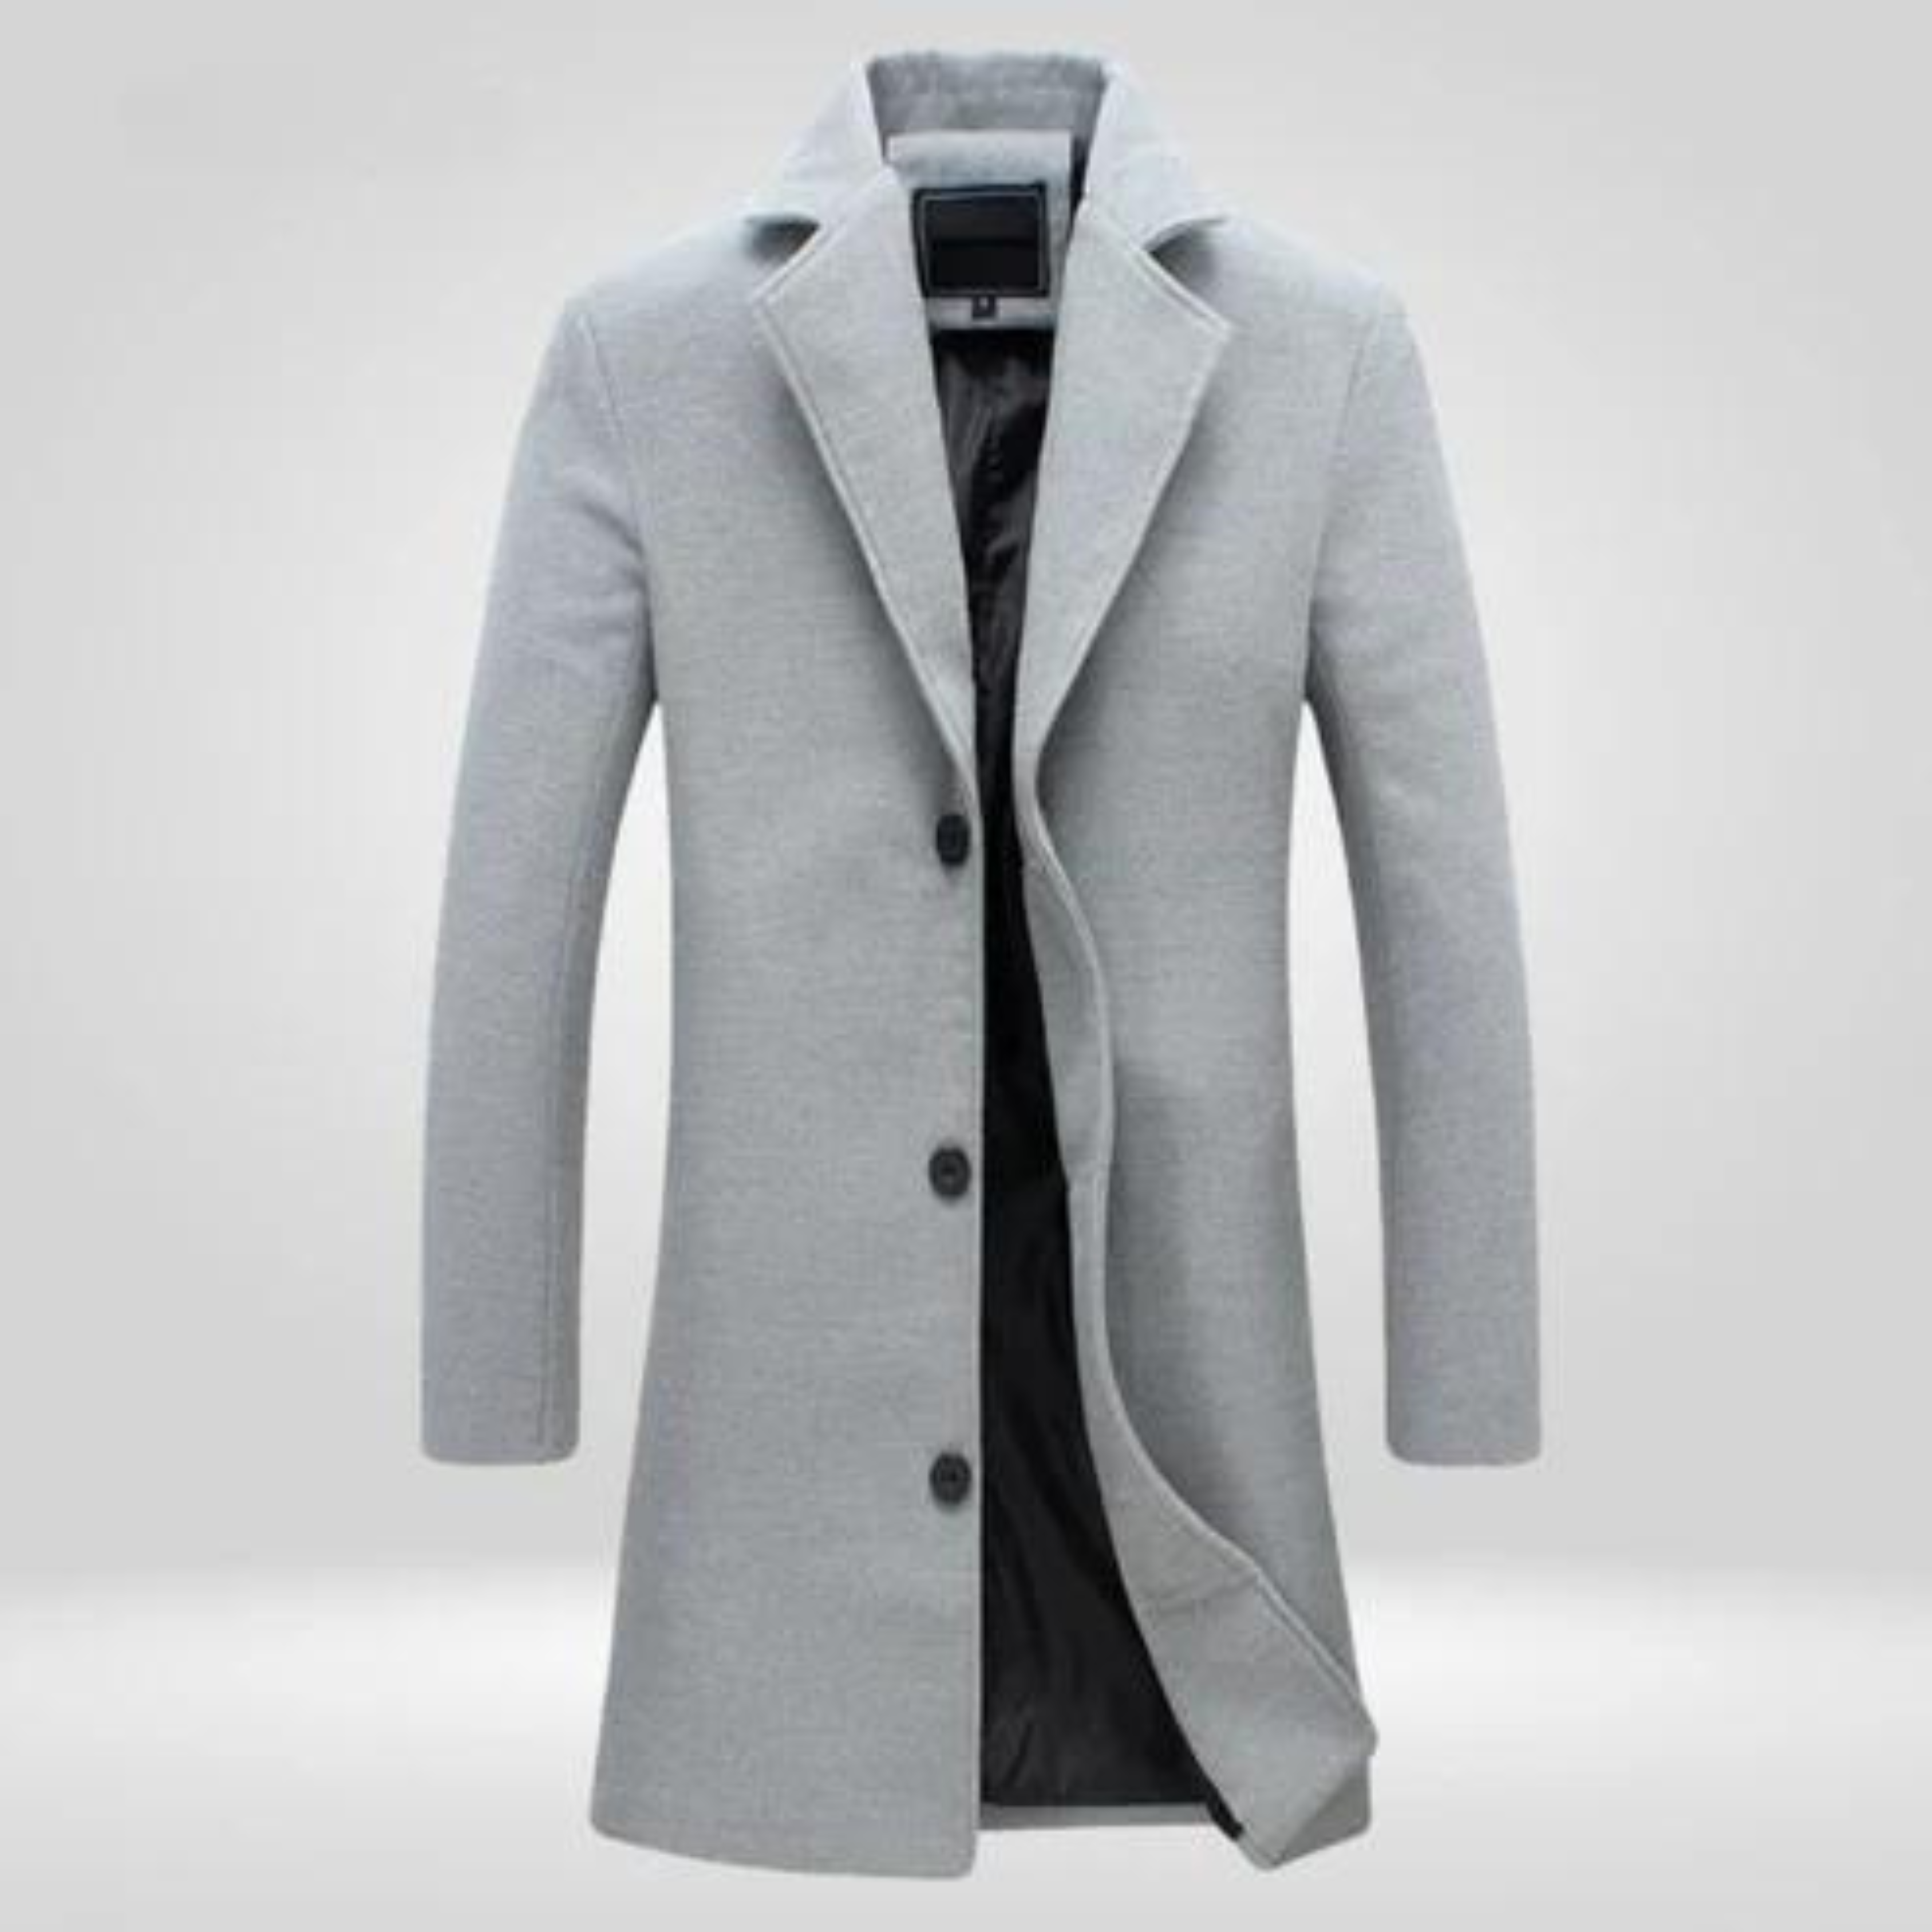 DAWSON™ - Sophisticated Winter Coat